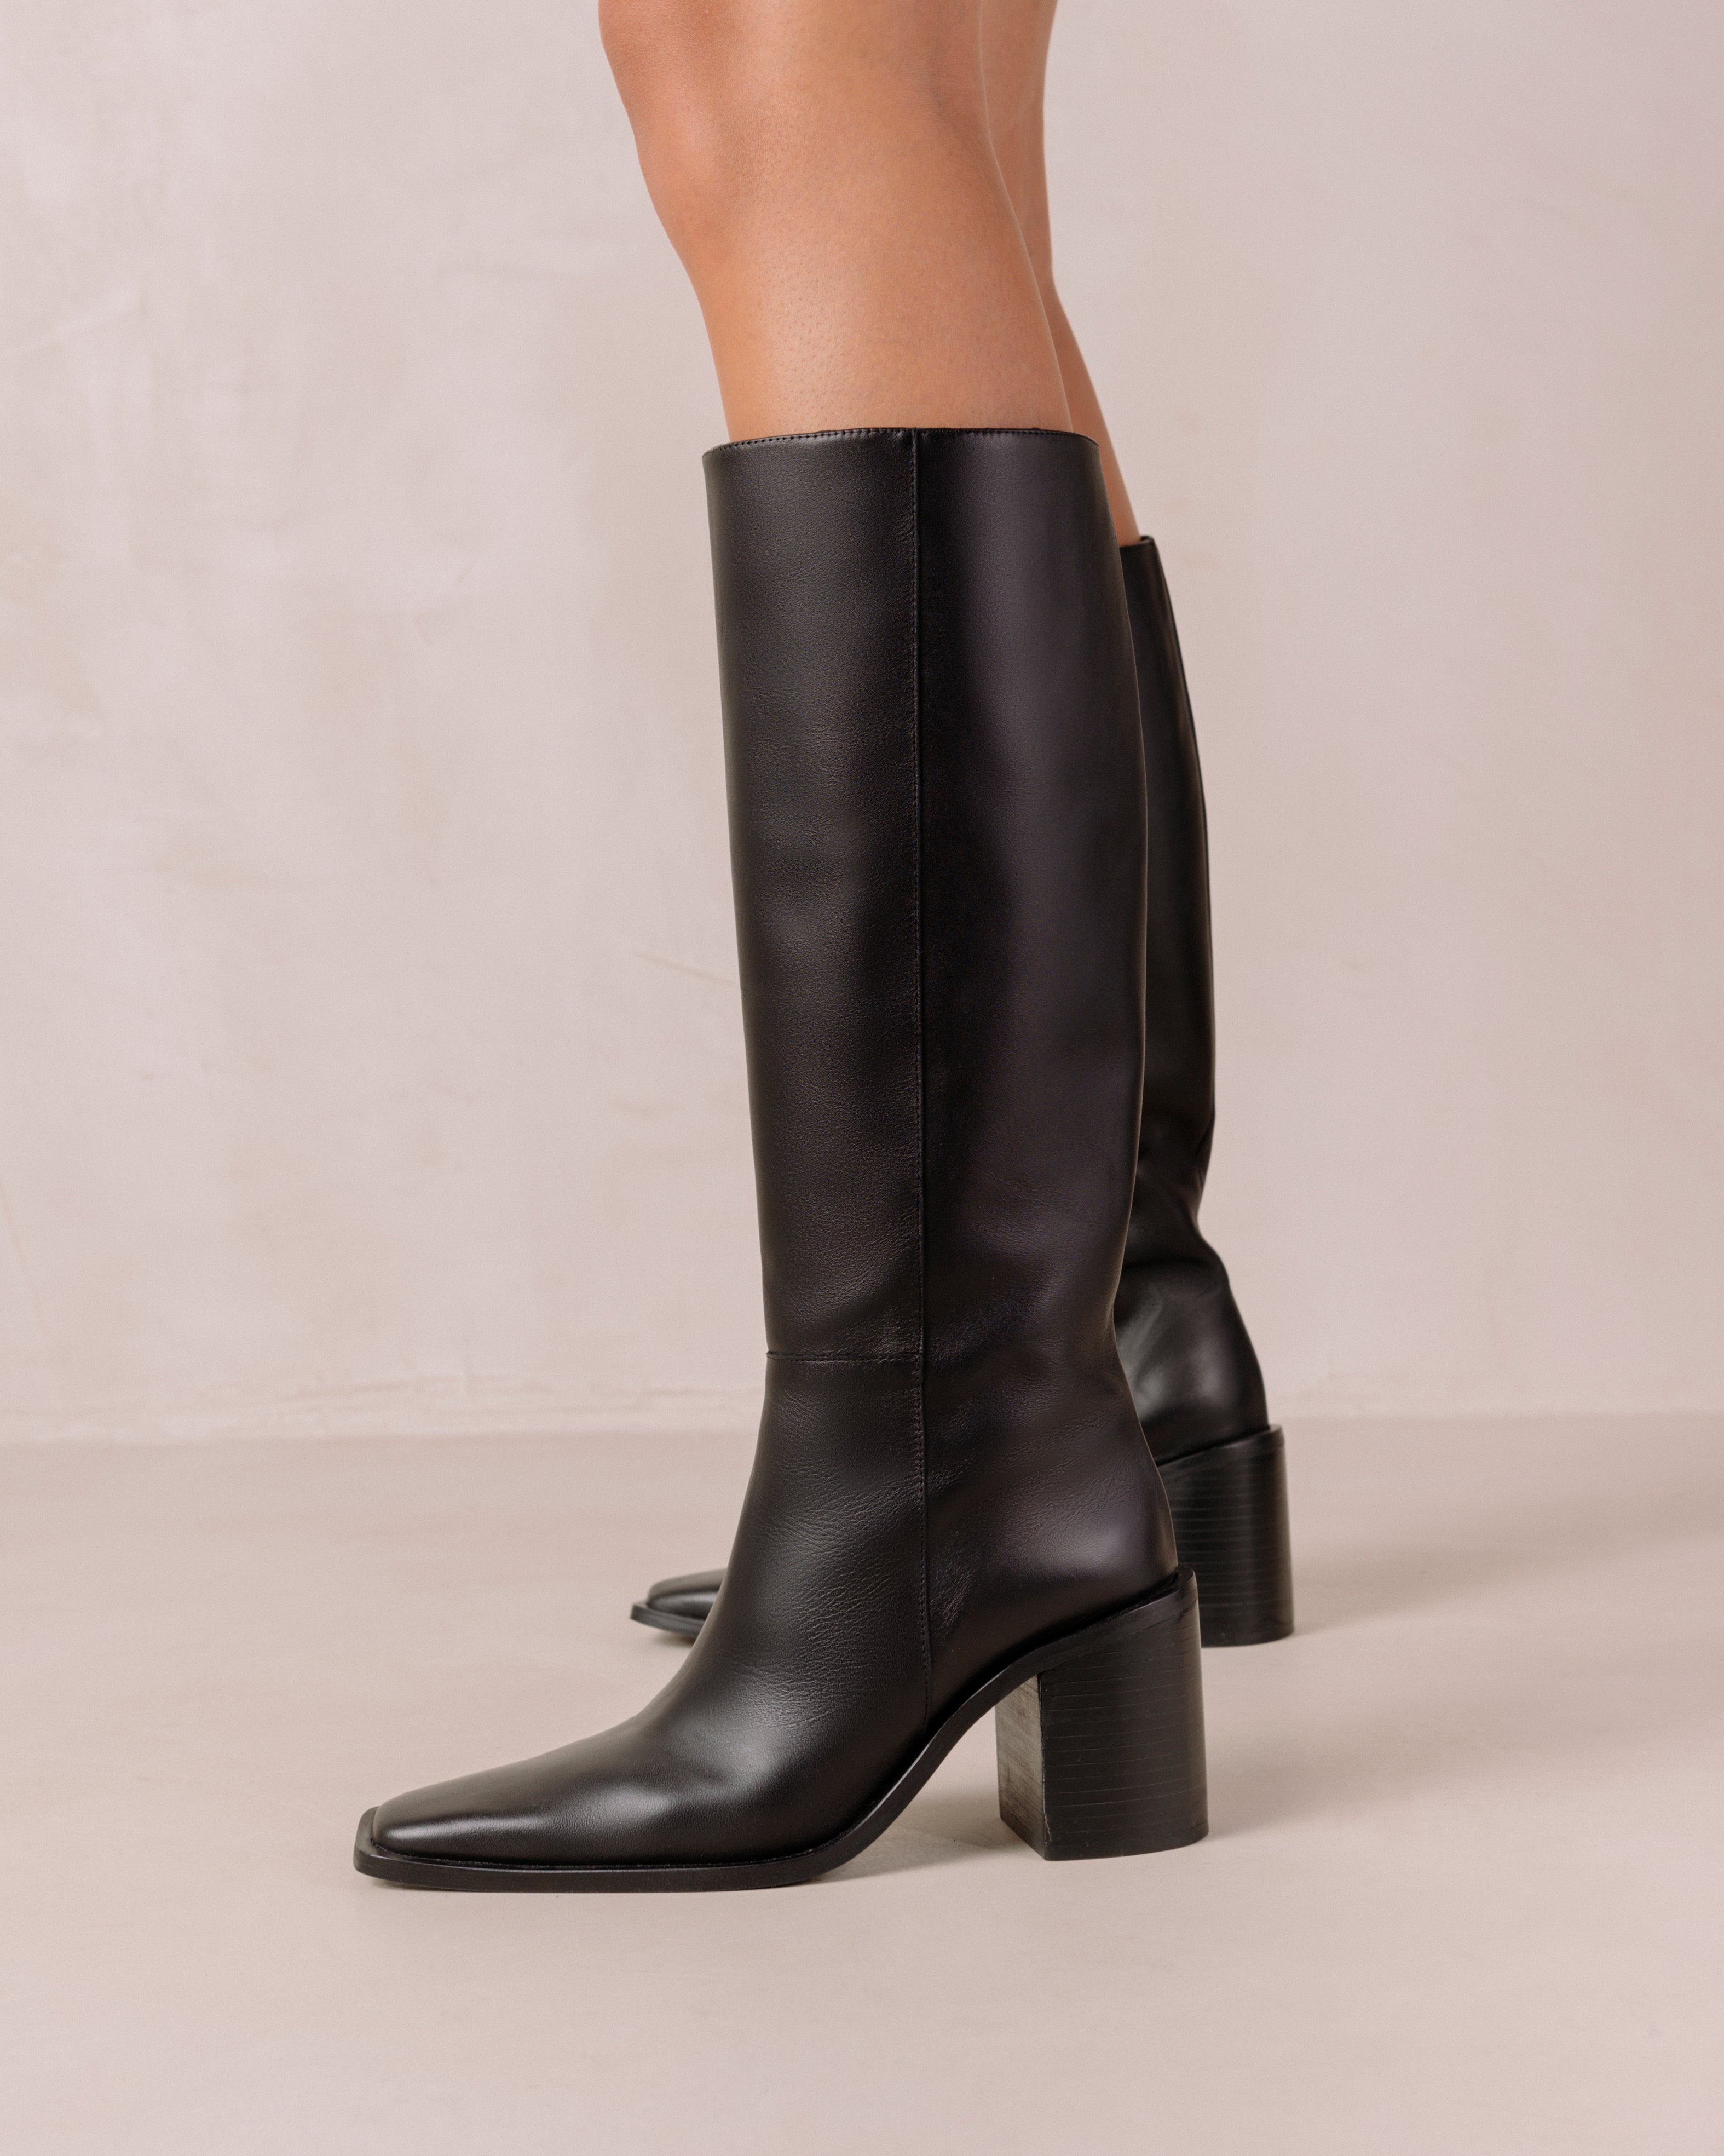 berta-black-boots-alohas-889175.jpg